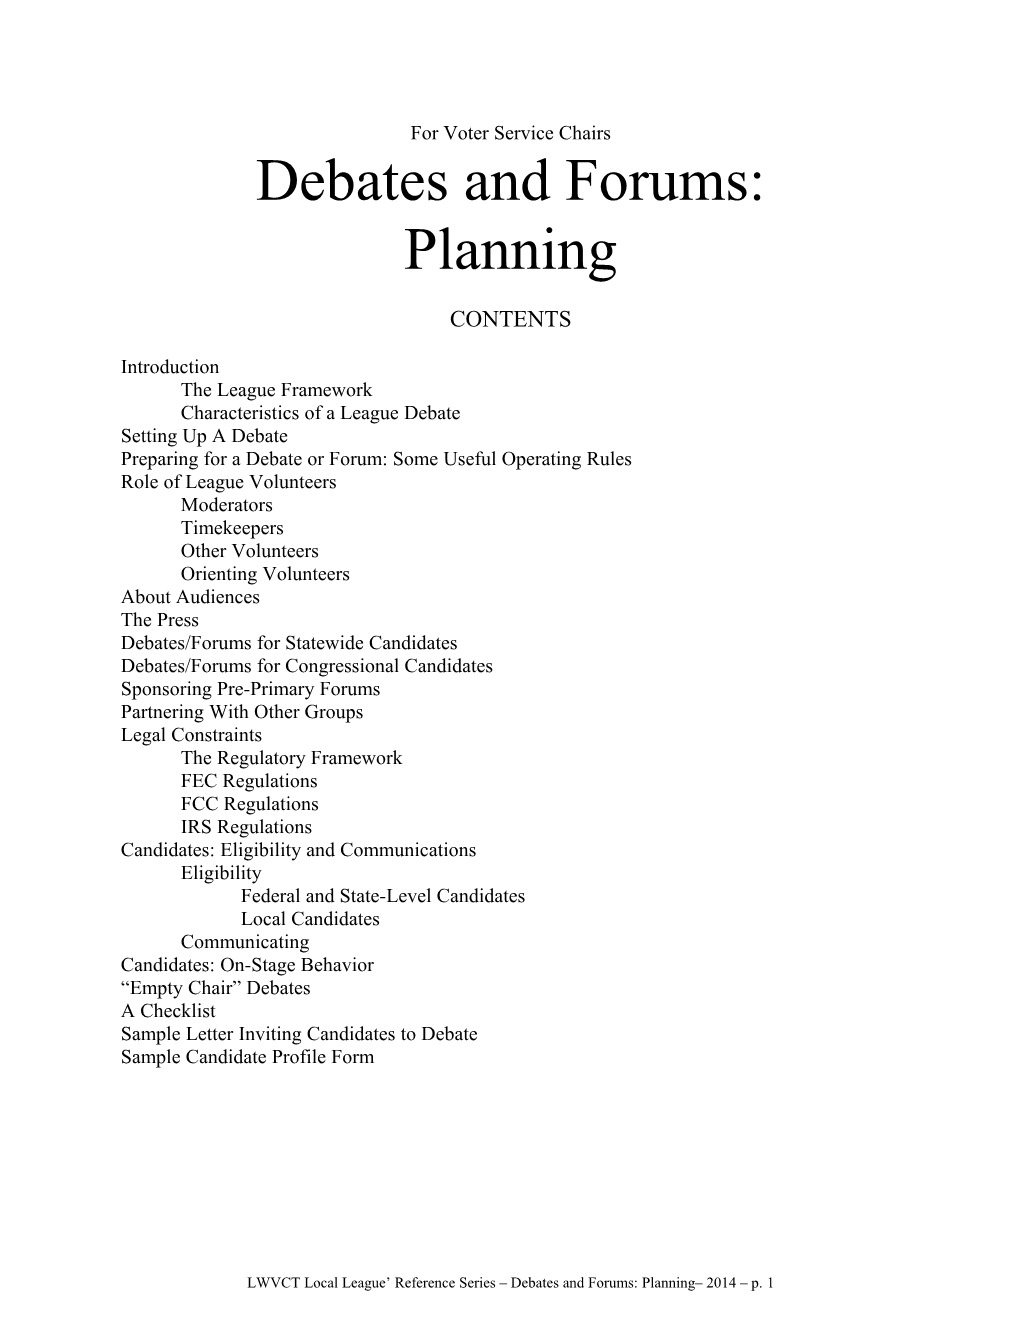 Debates and Forums